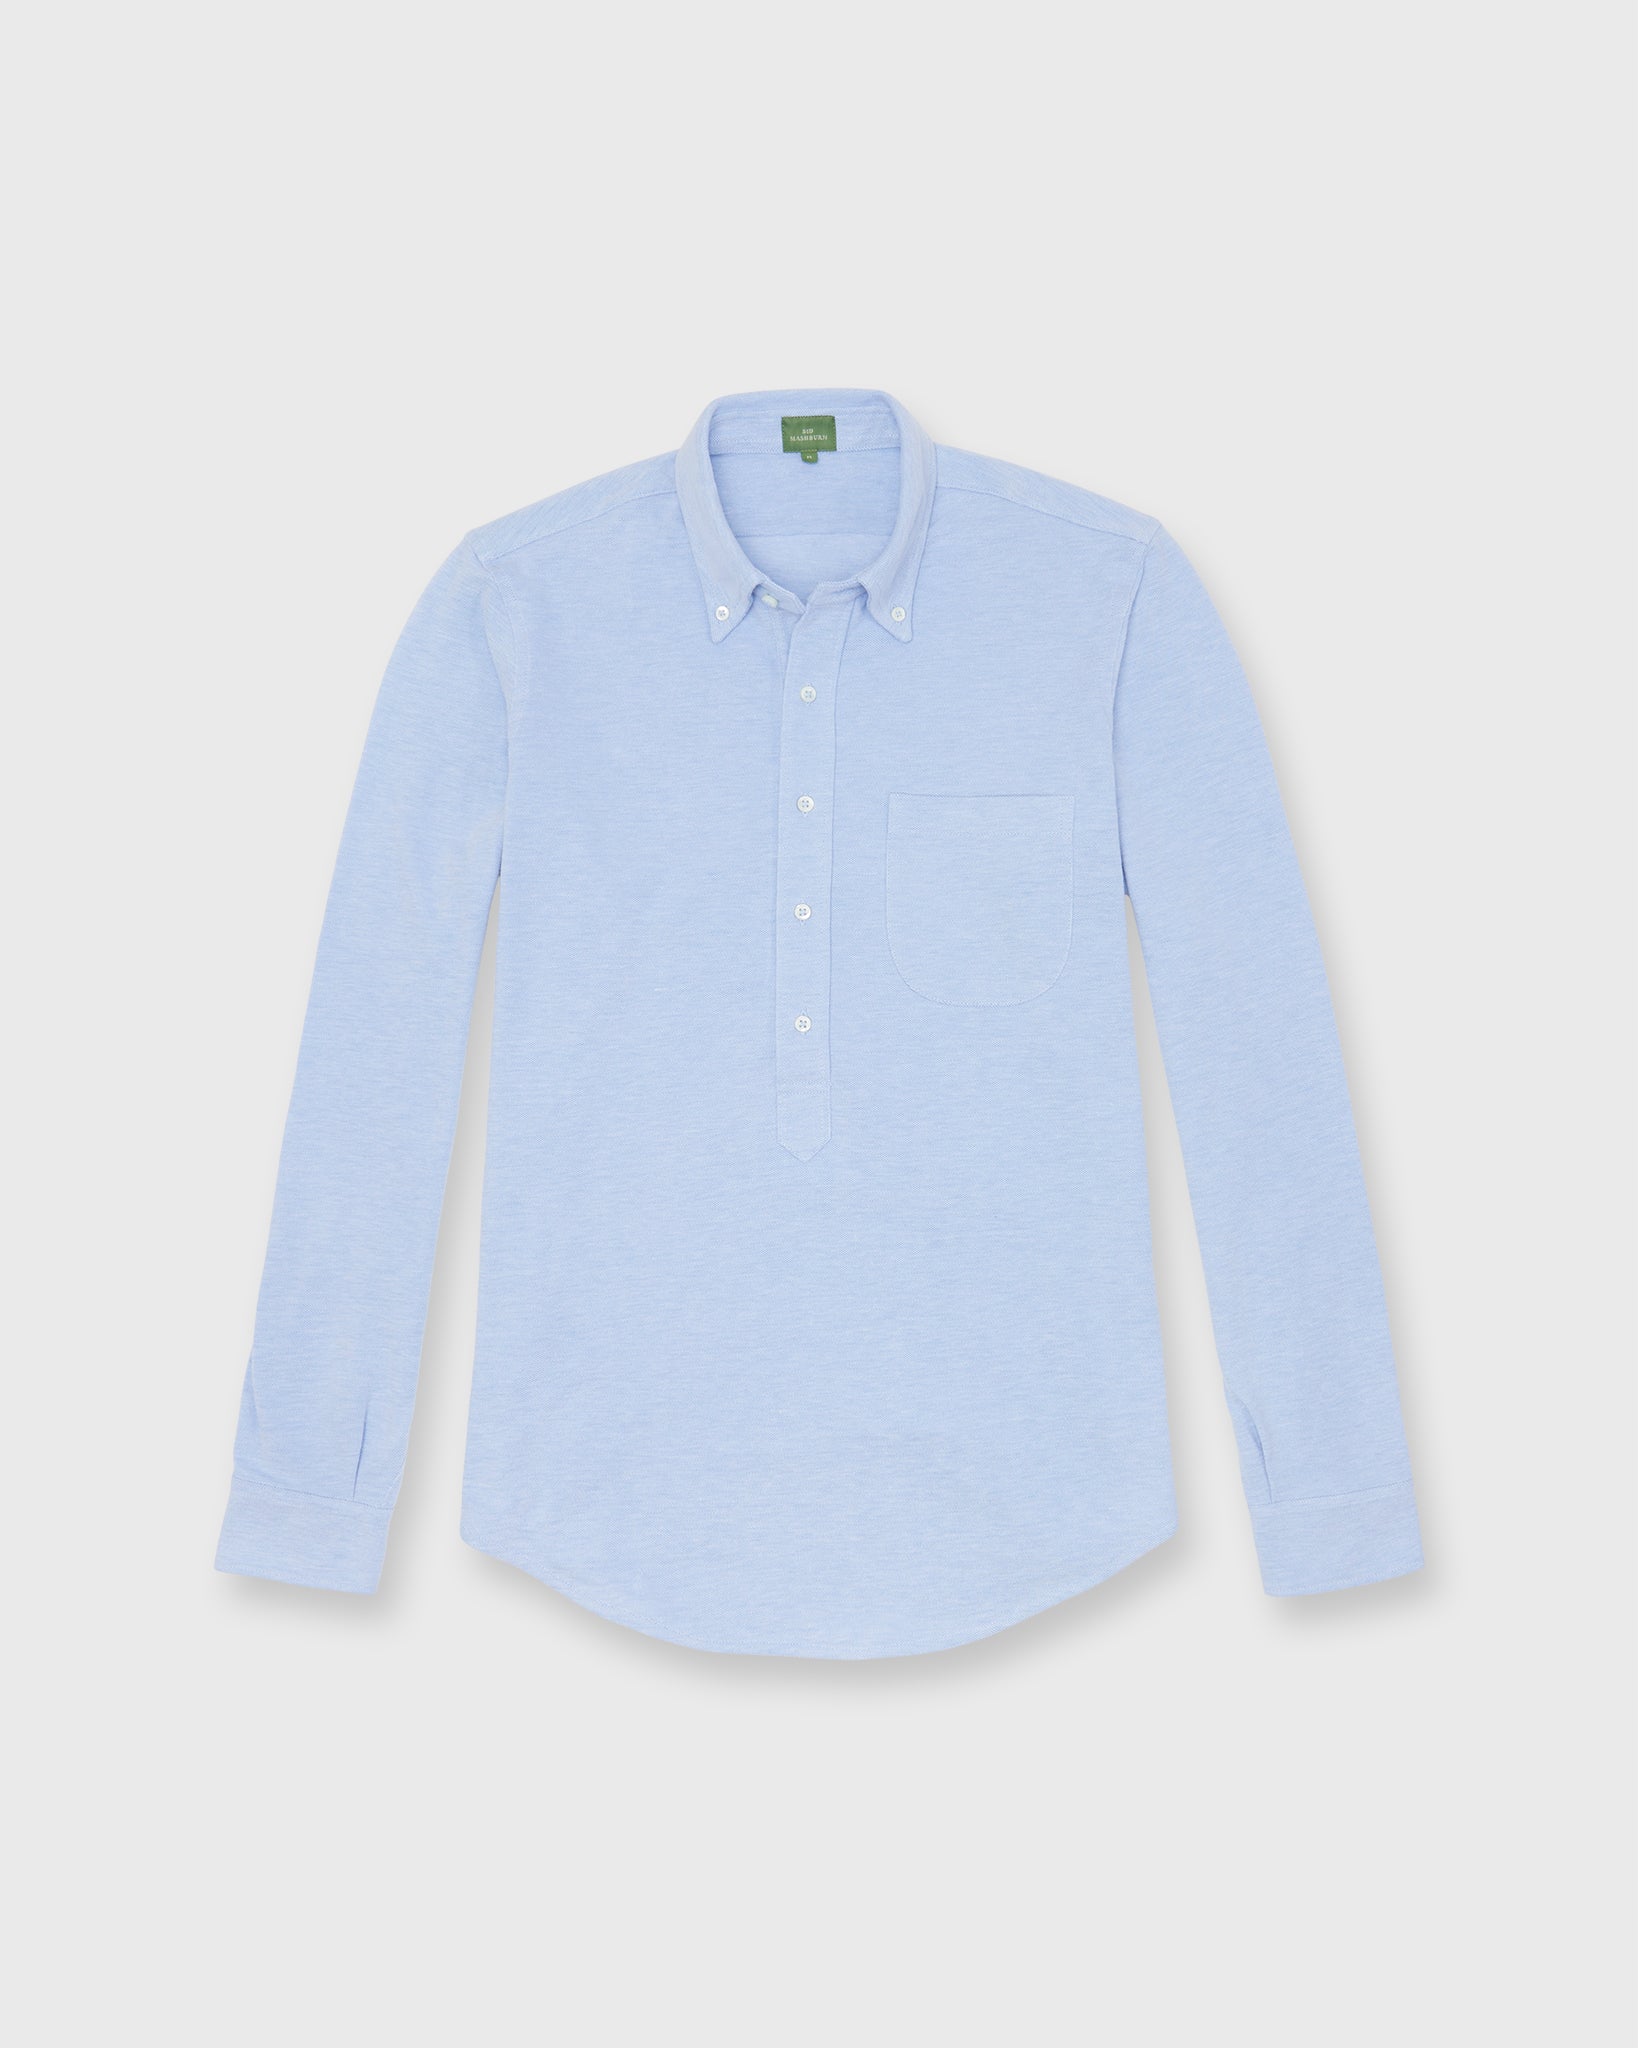 Knit Button-Down Popover Shirt in Sky Oxford Pima Pique